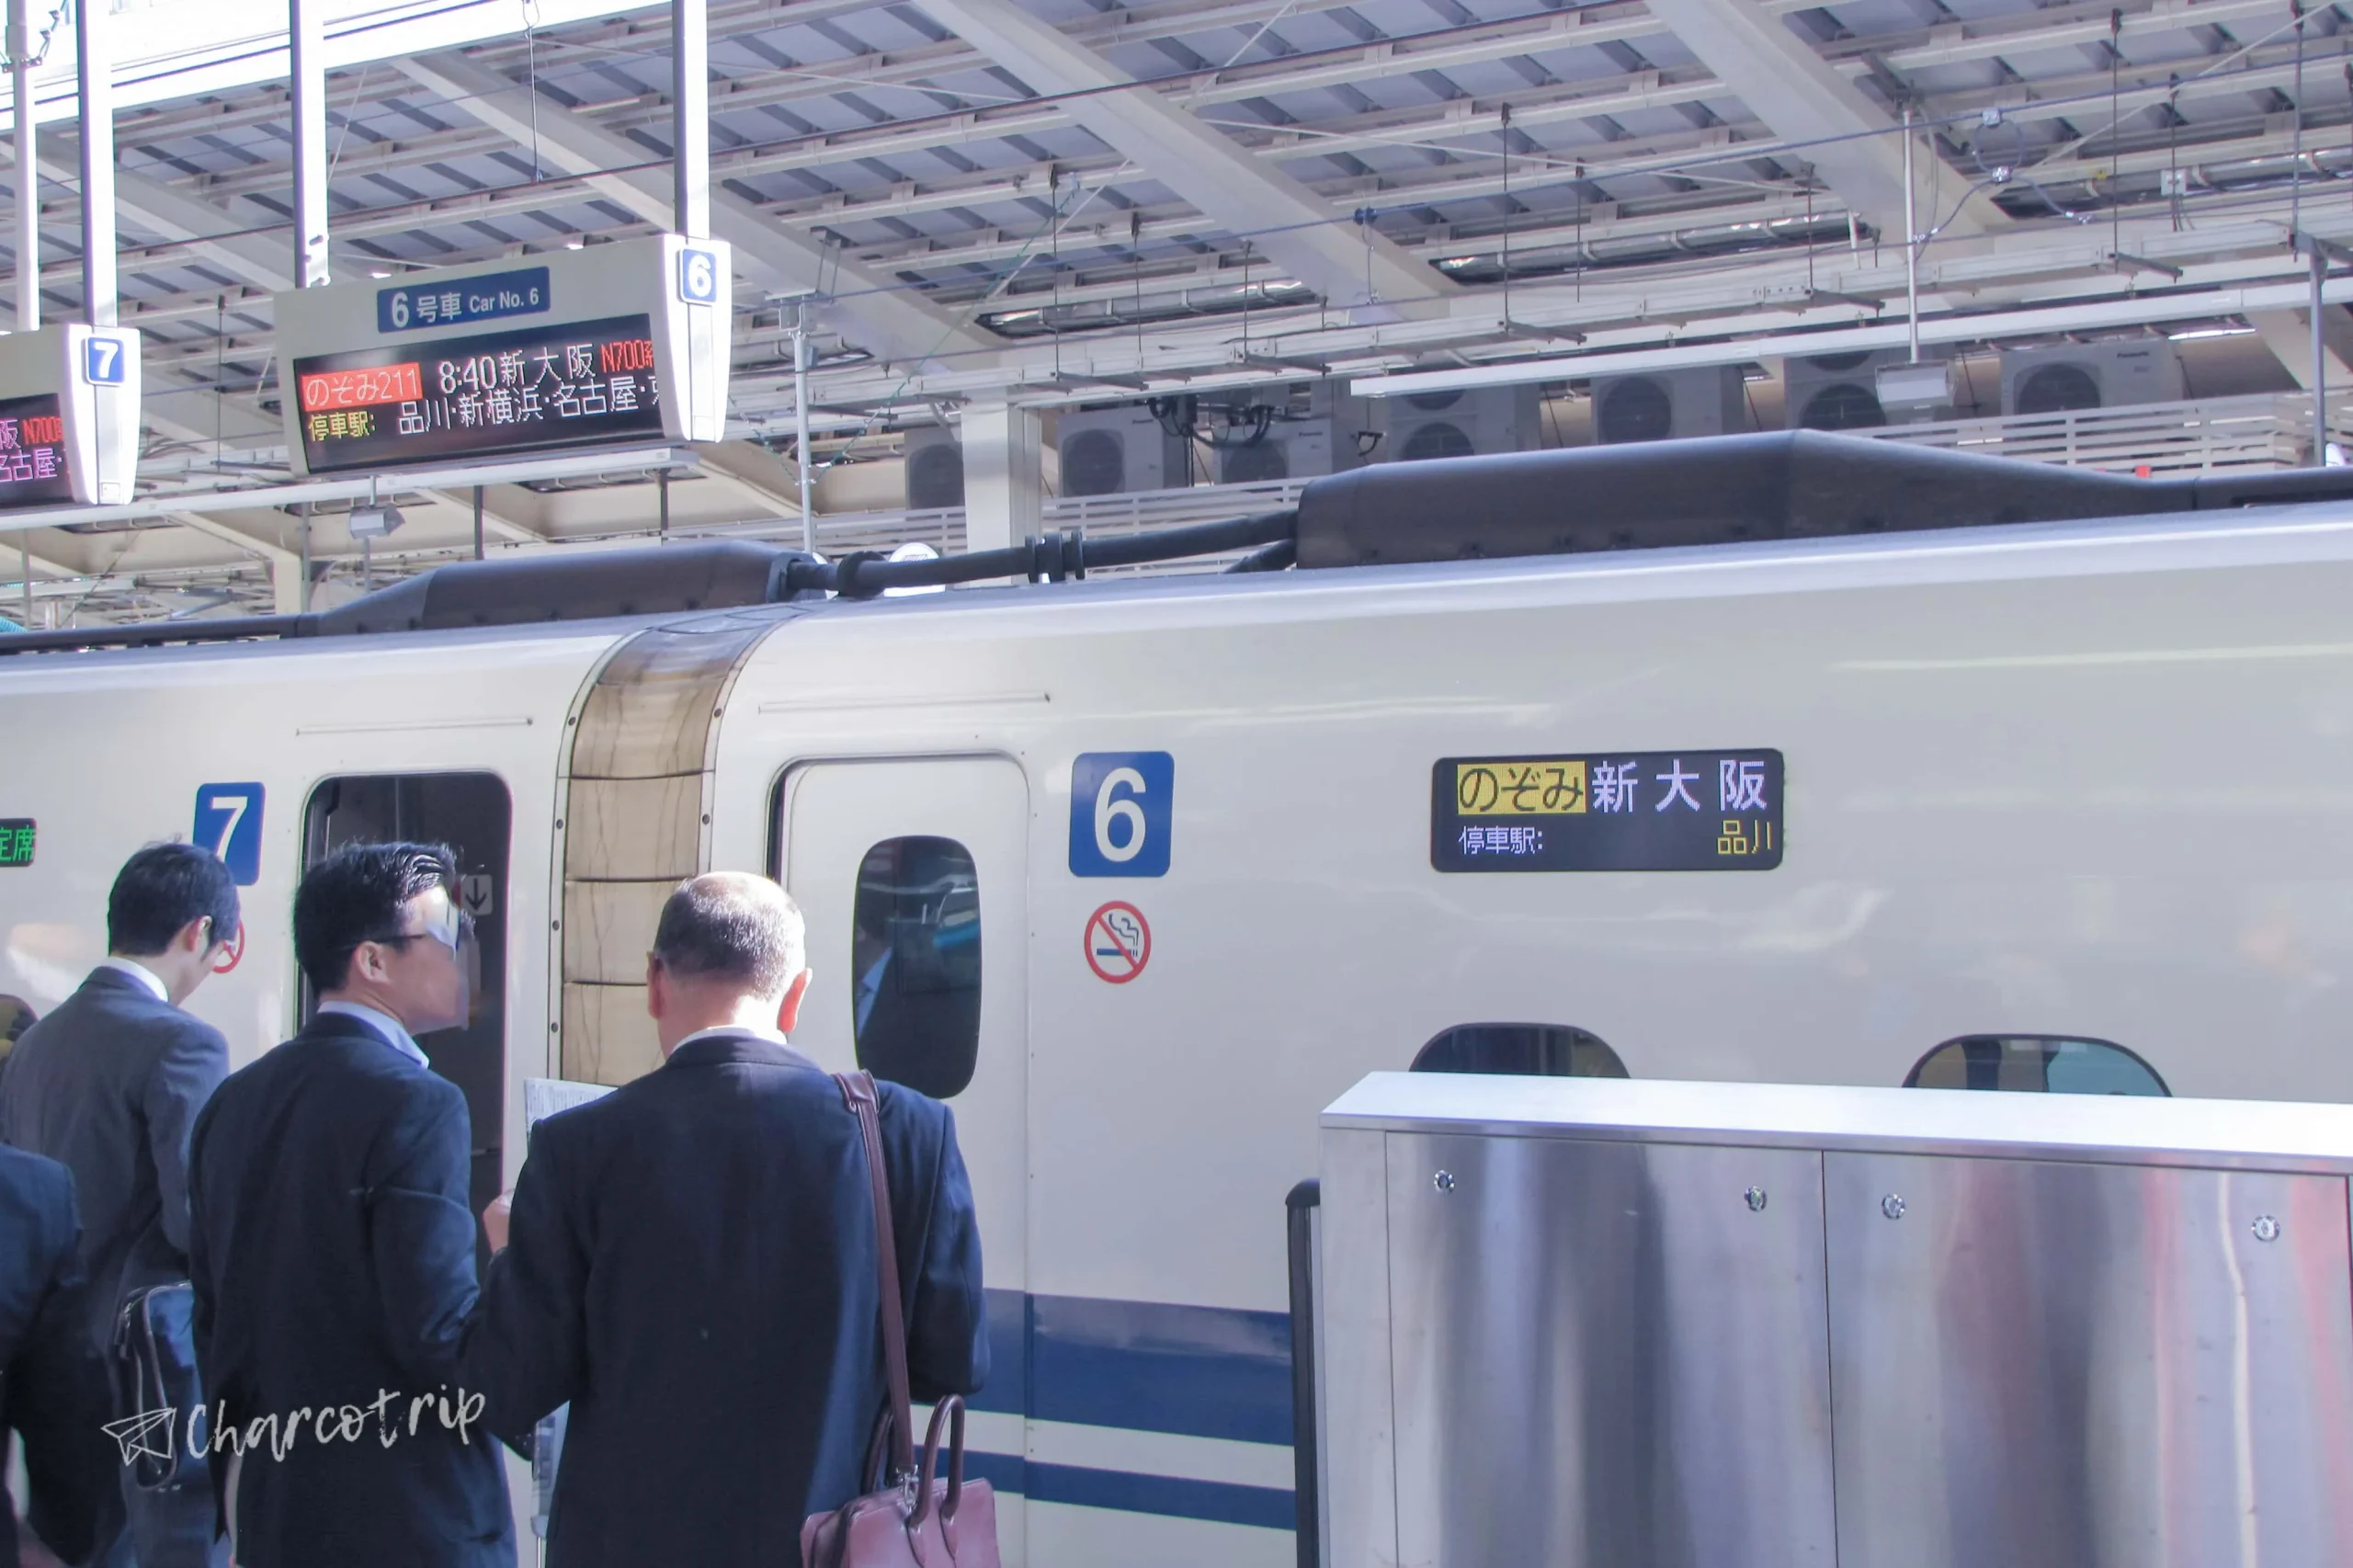 Getting into the shinkansen